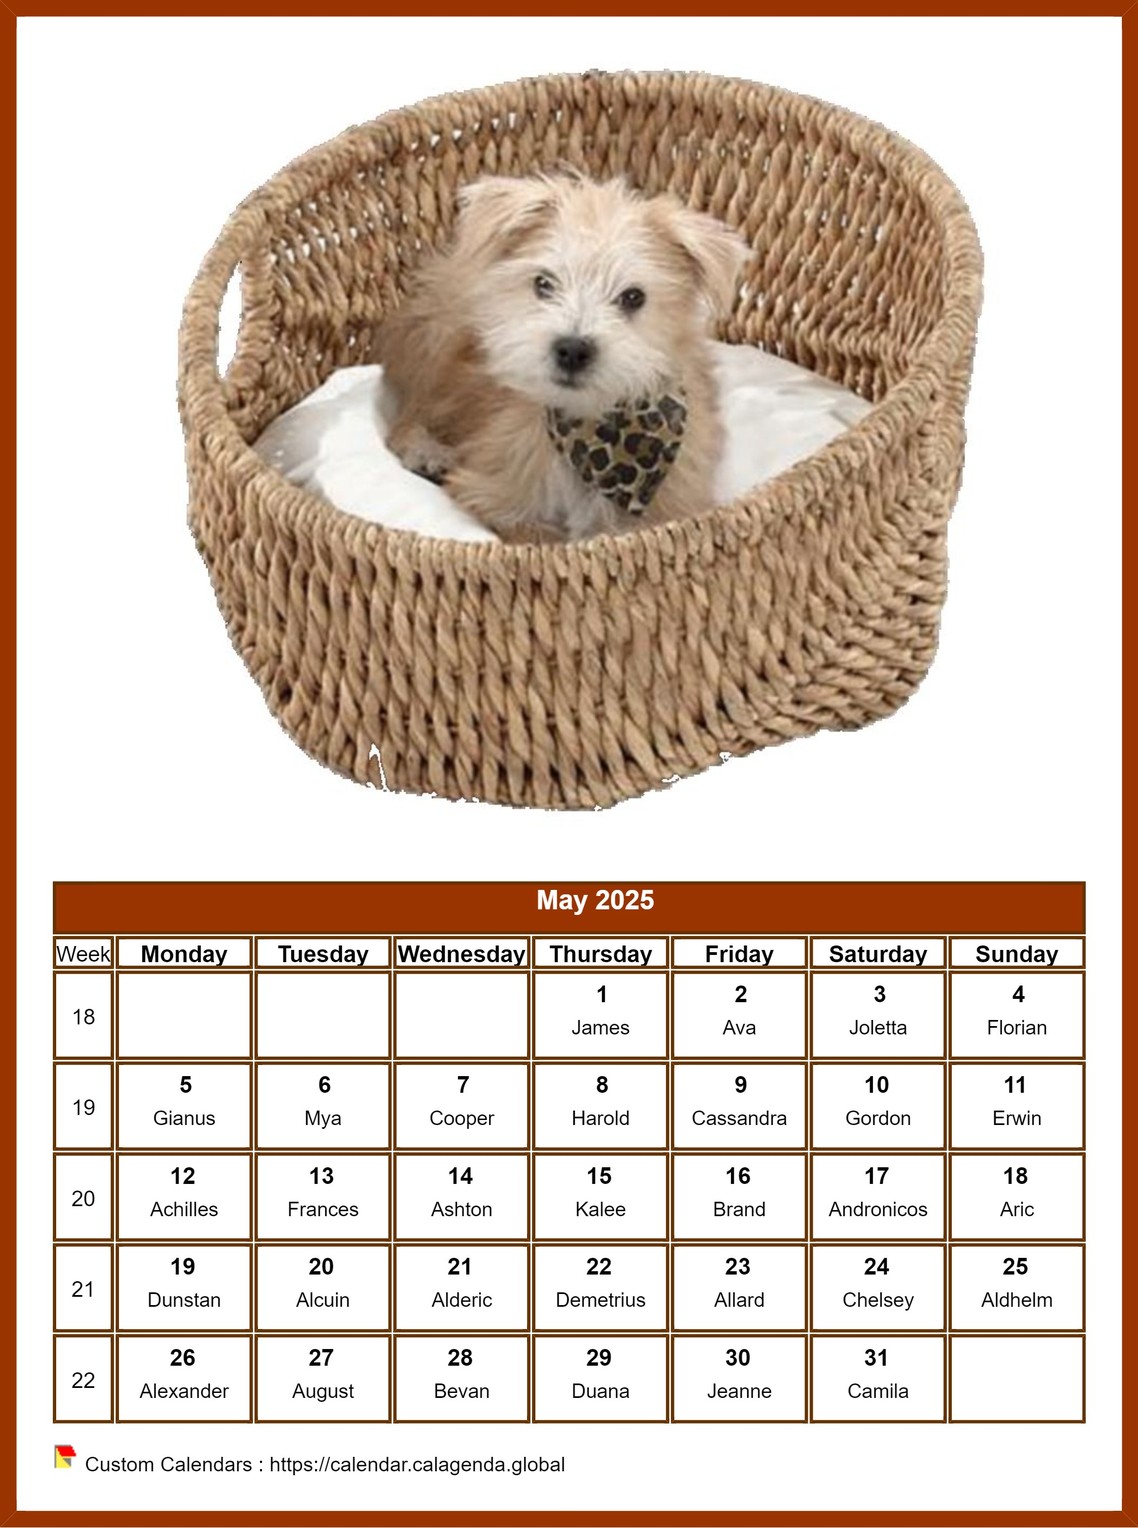 Calendar May 2025 dogs